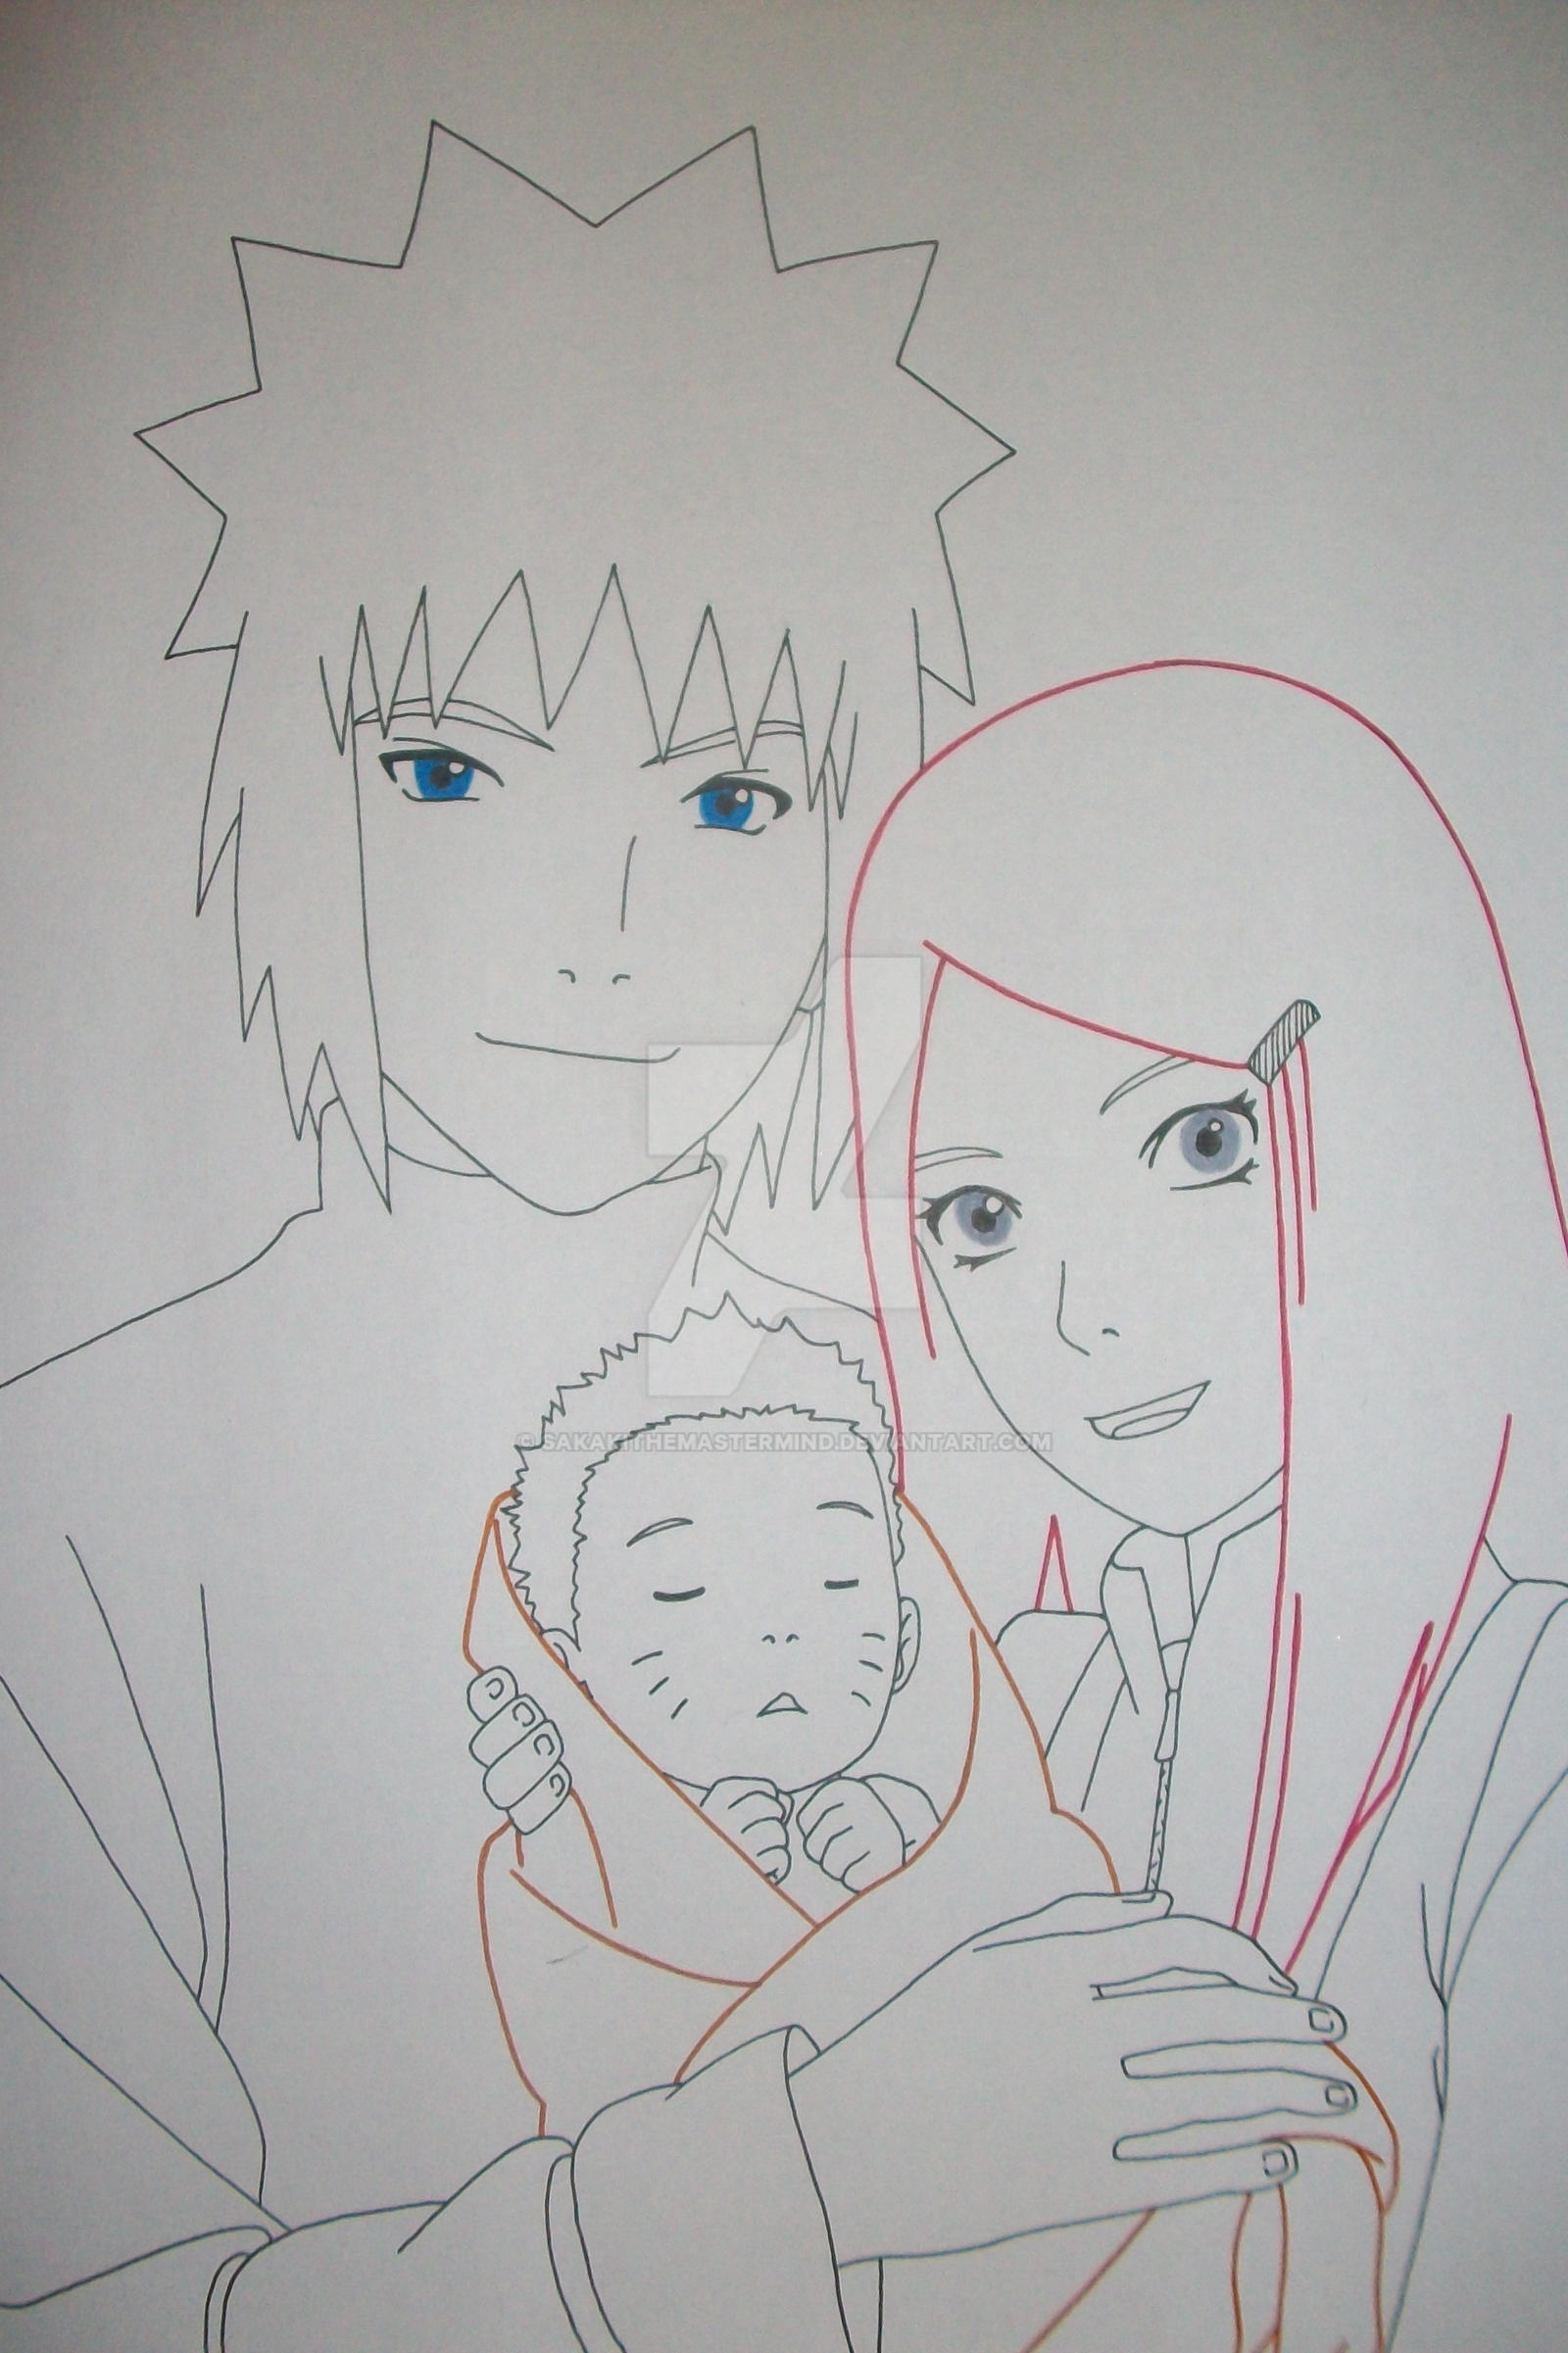 Minato drawing dooooone! Now the whole family is done🧡 - I hope